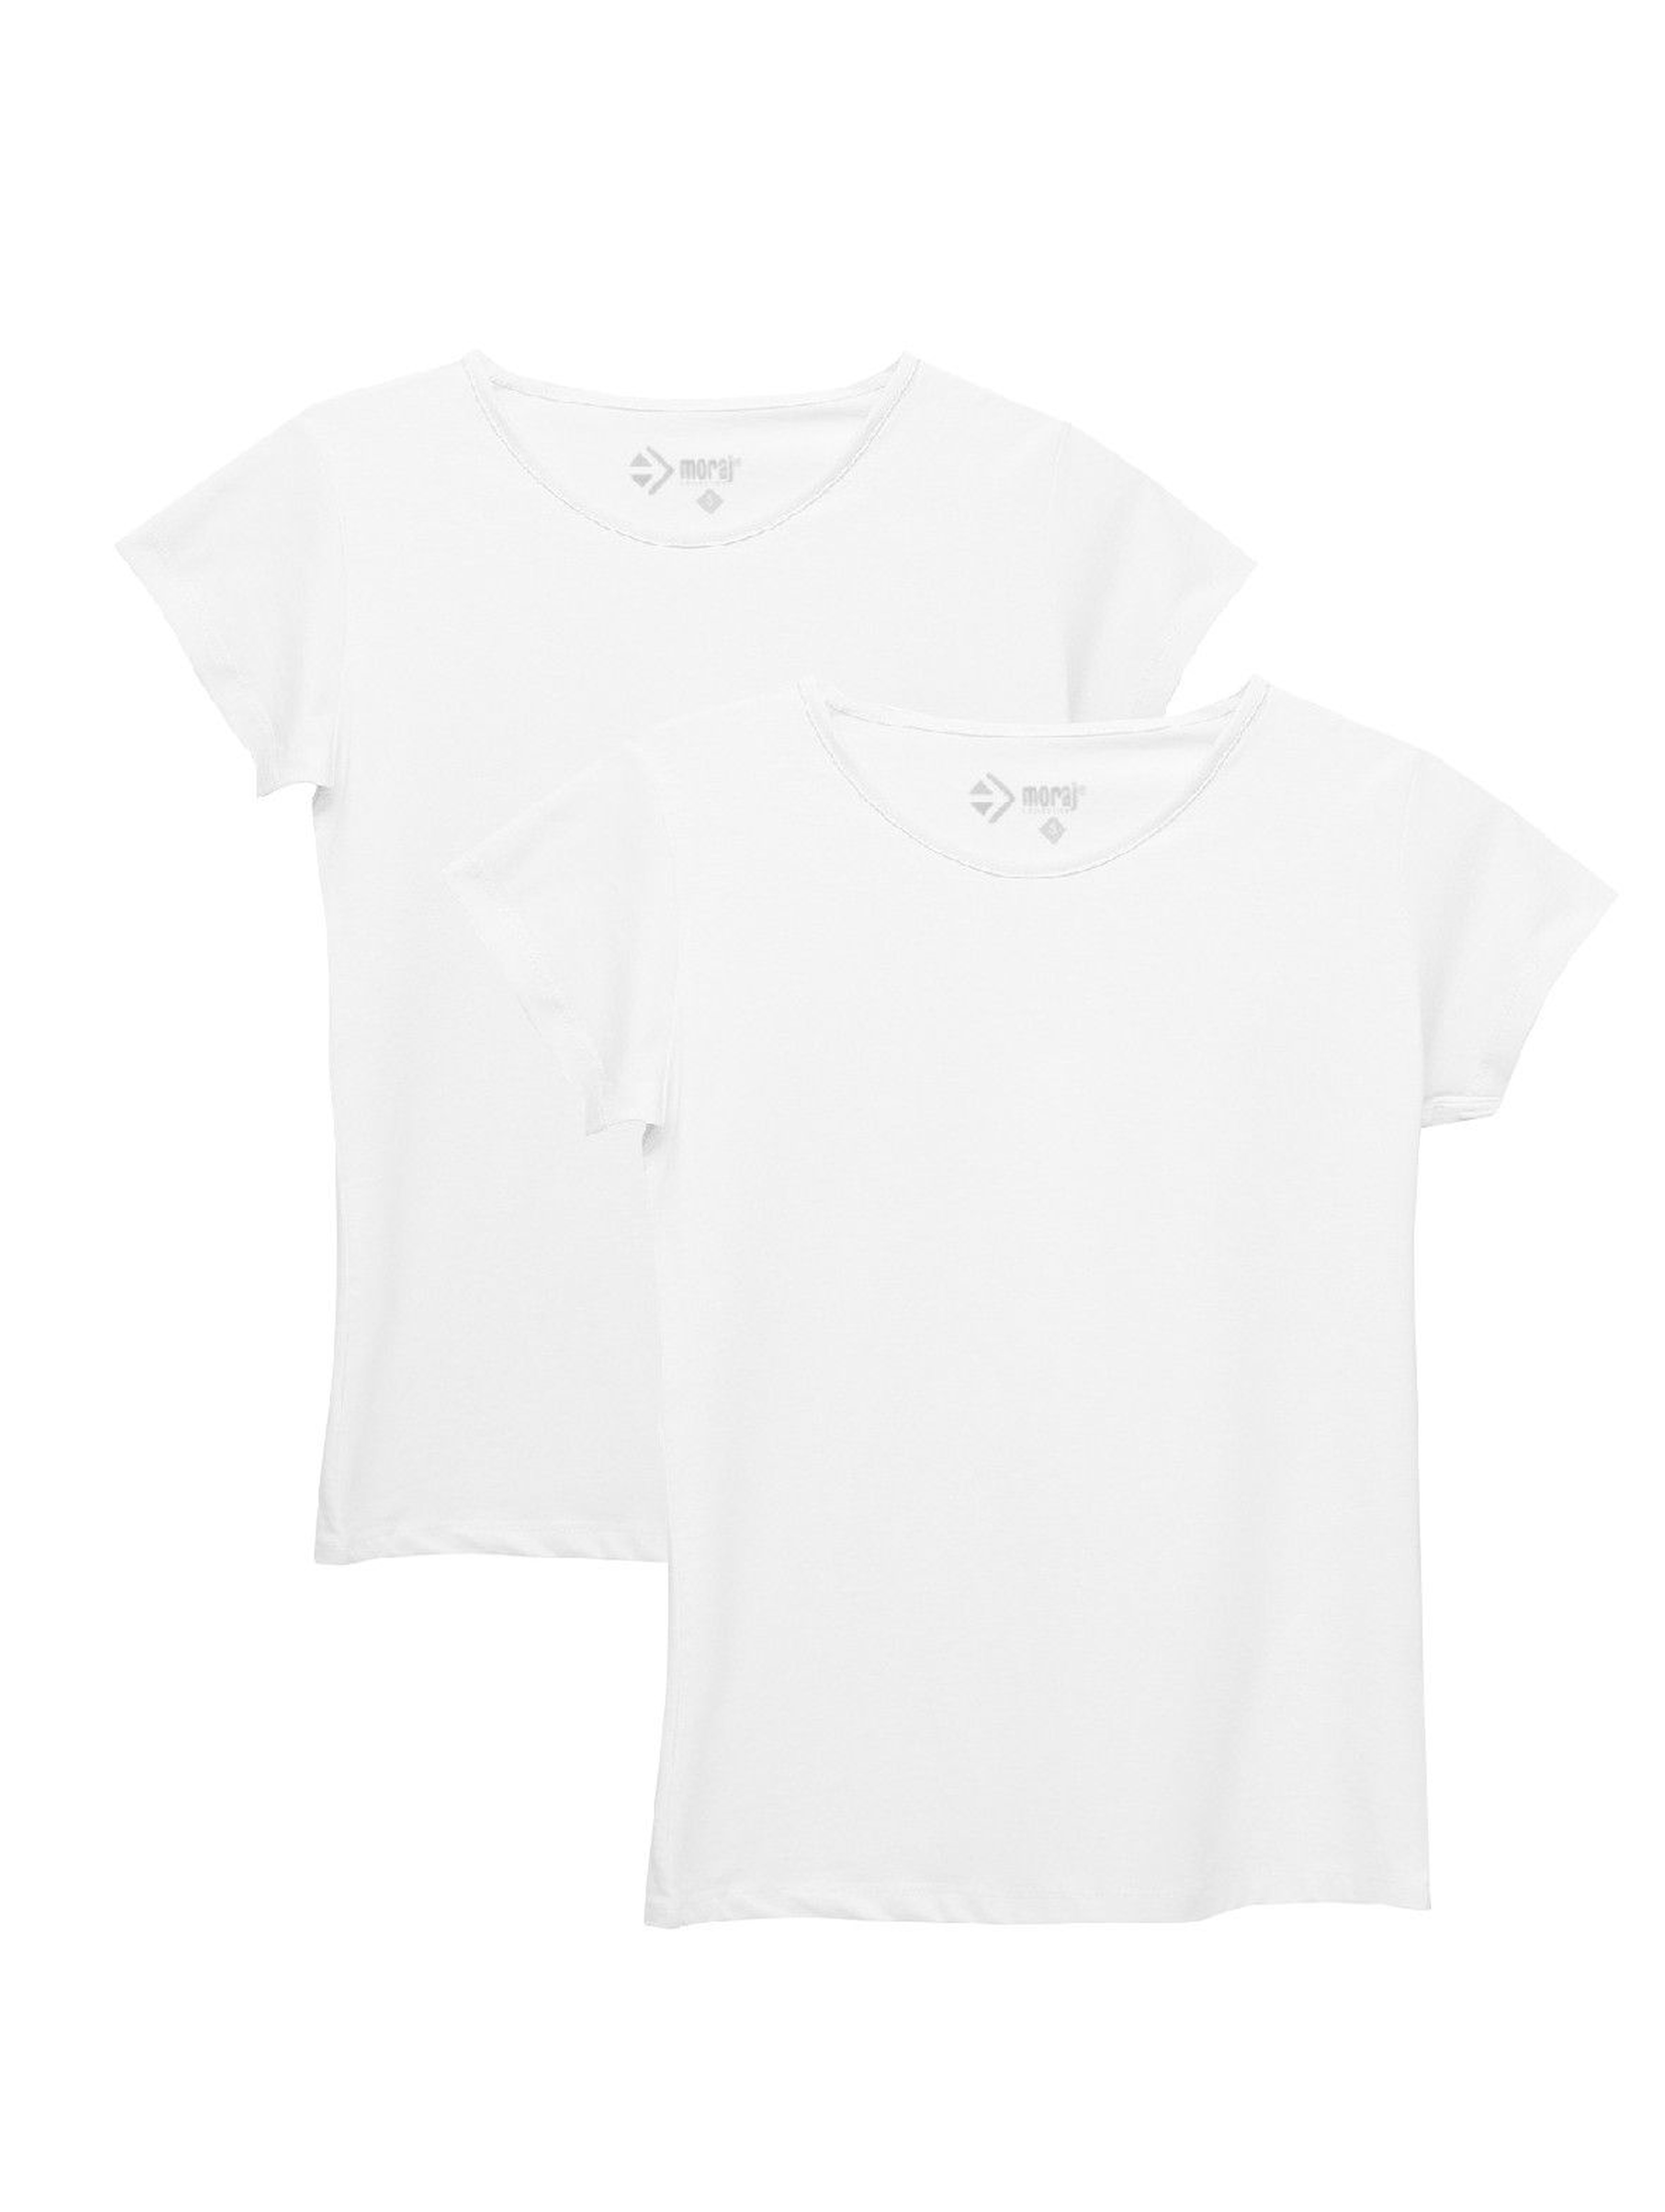 T-shirt damski biały 2pak